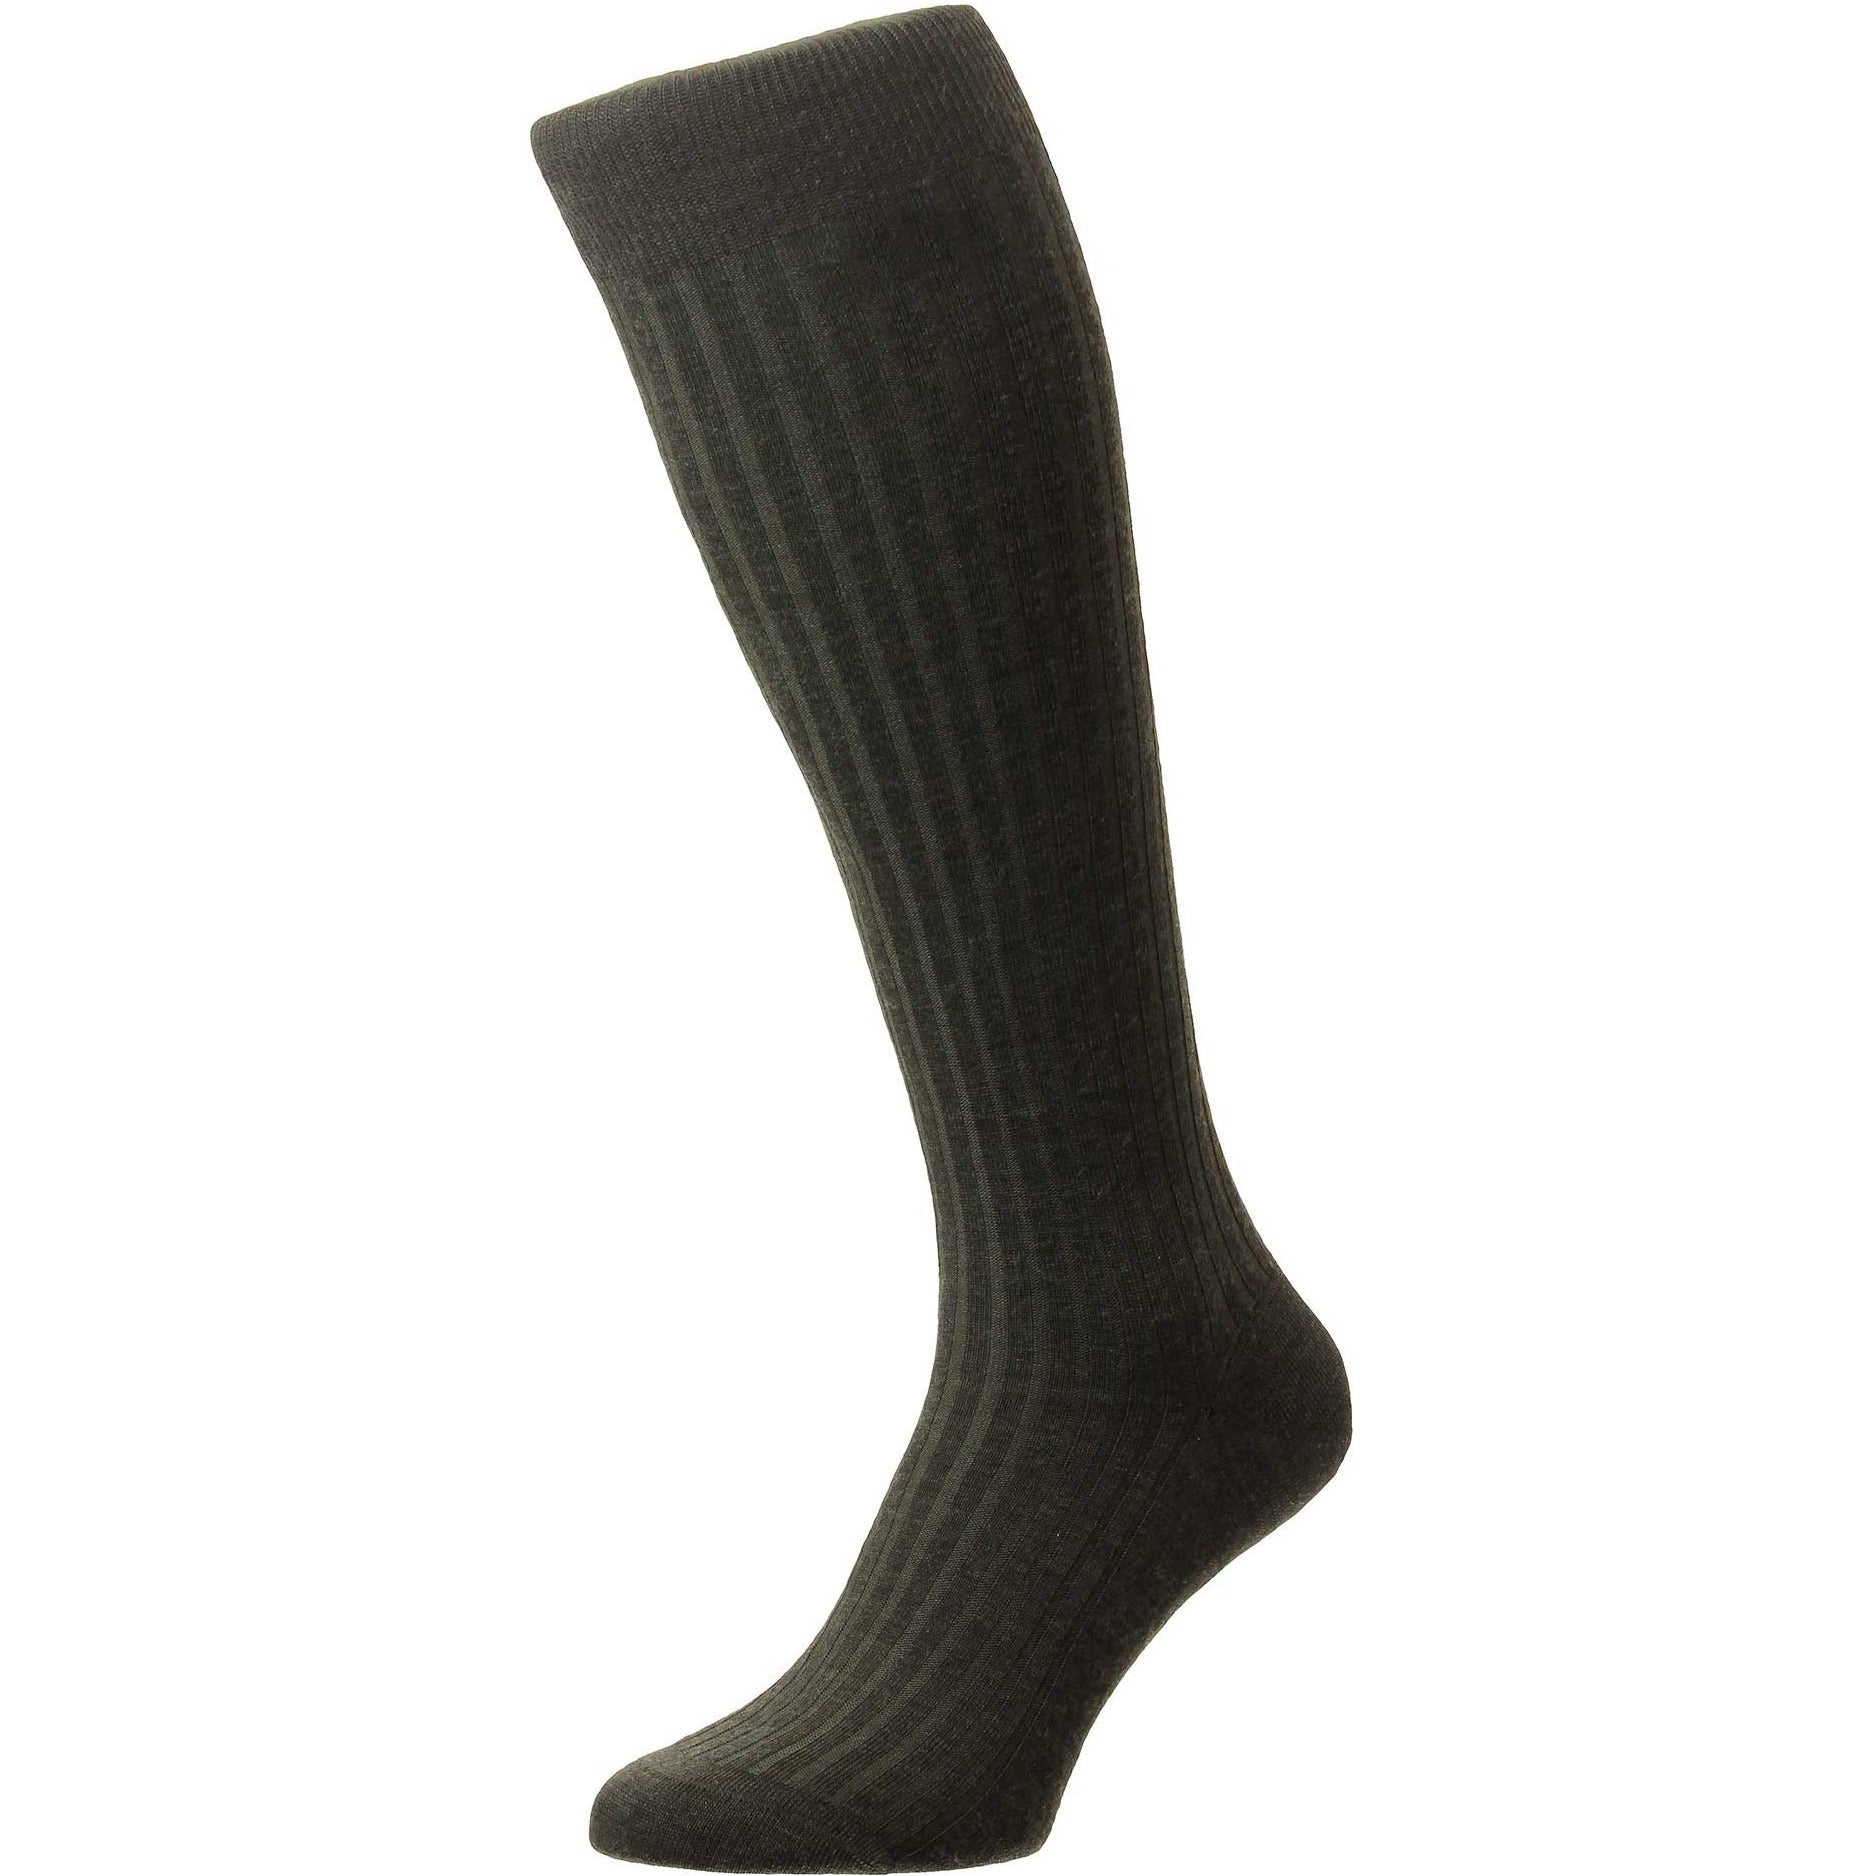 Laburnum 5x3 Rib Merino Over the Calf Wool Dress Socks